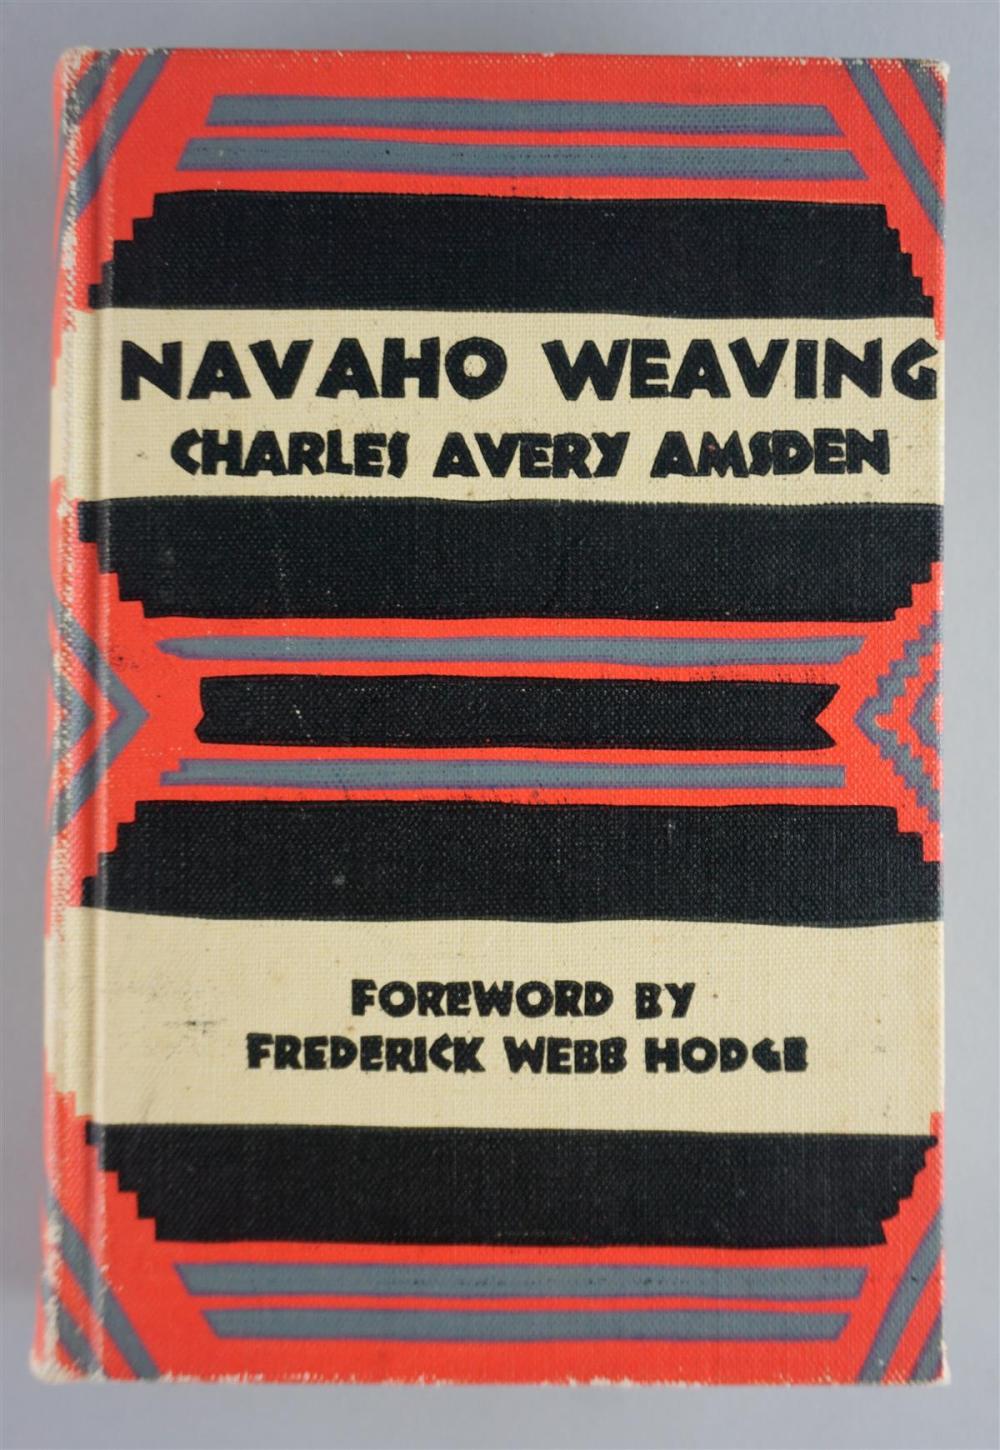 CHARLES AVERY AMSDEN. 'NAVAHO WEAVING'CHARLES